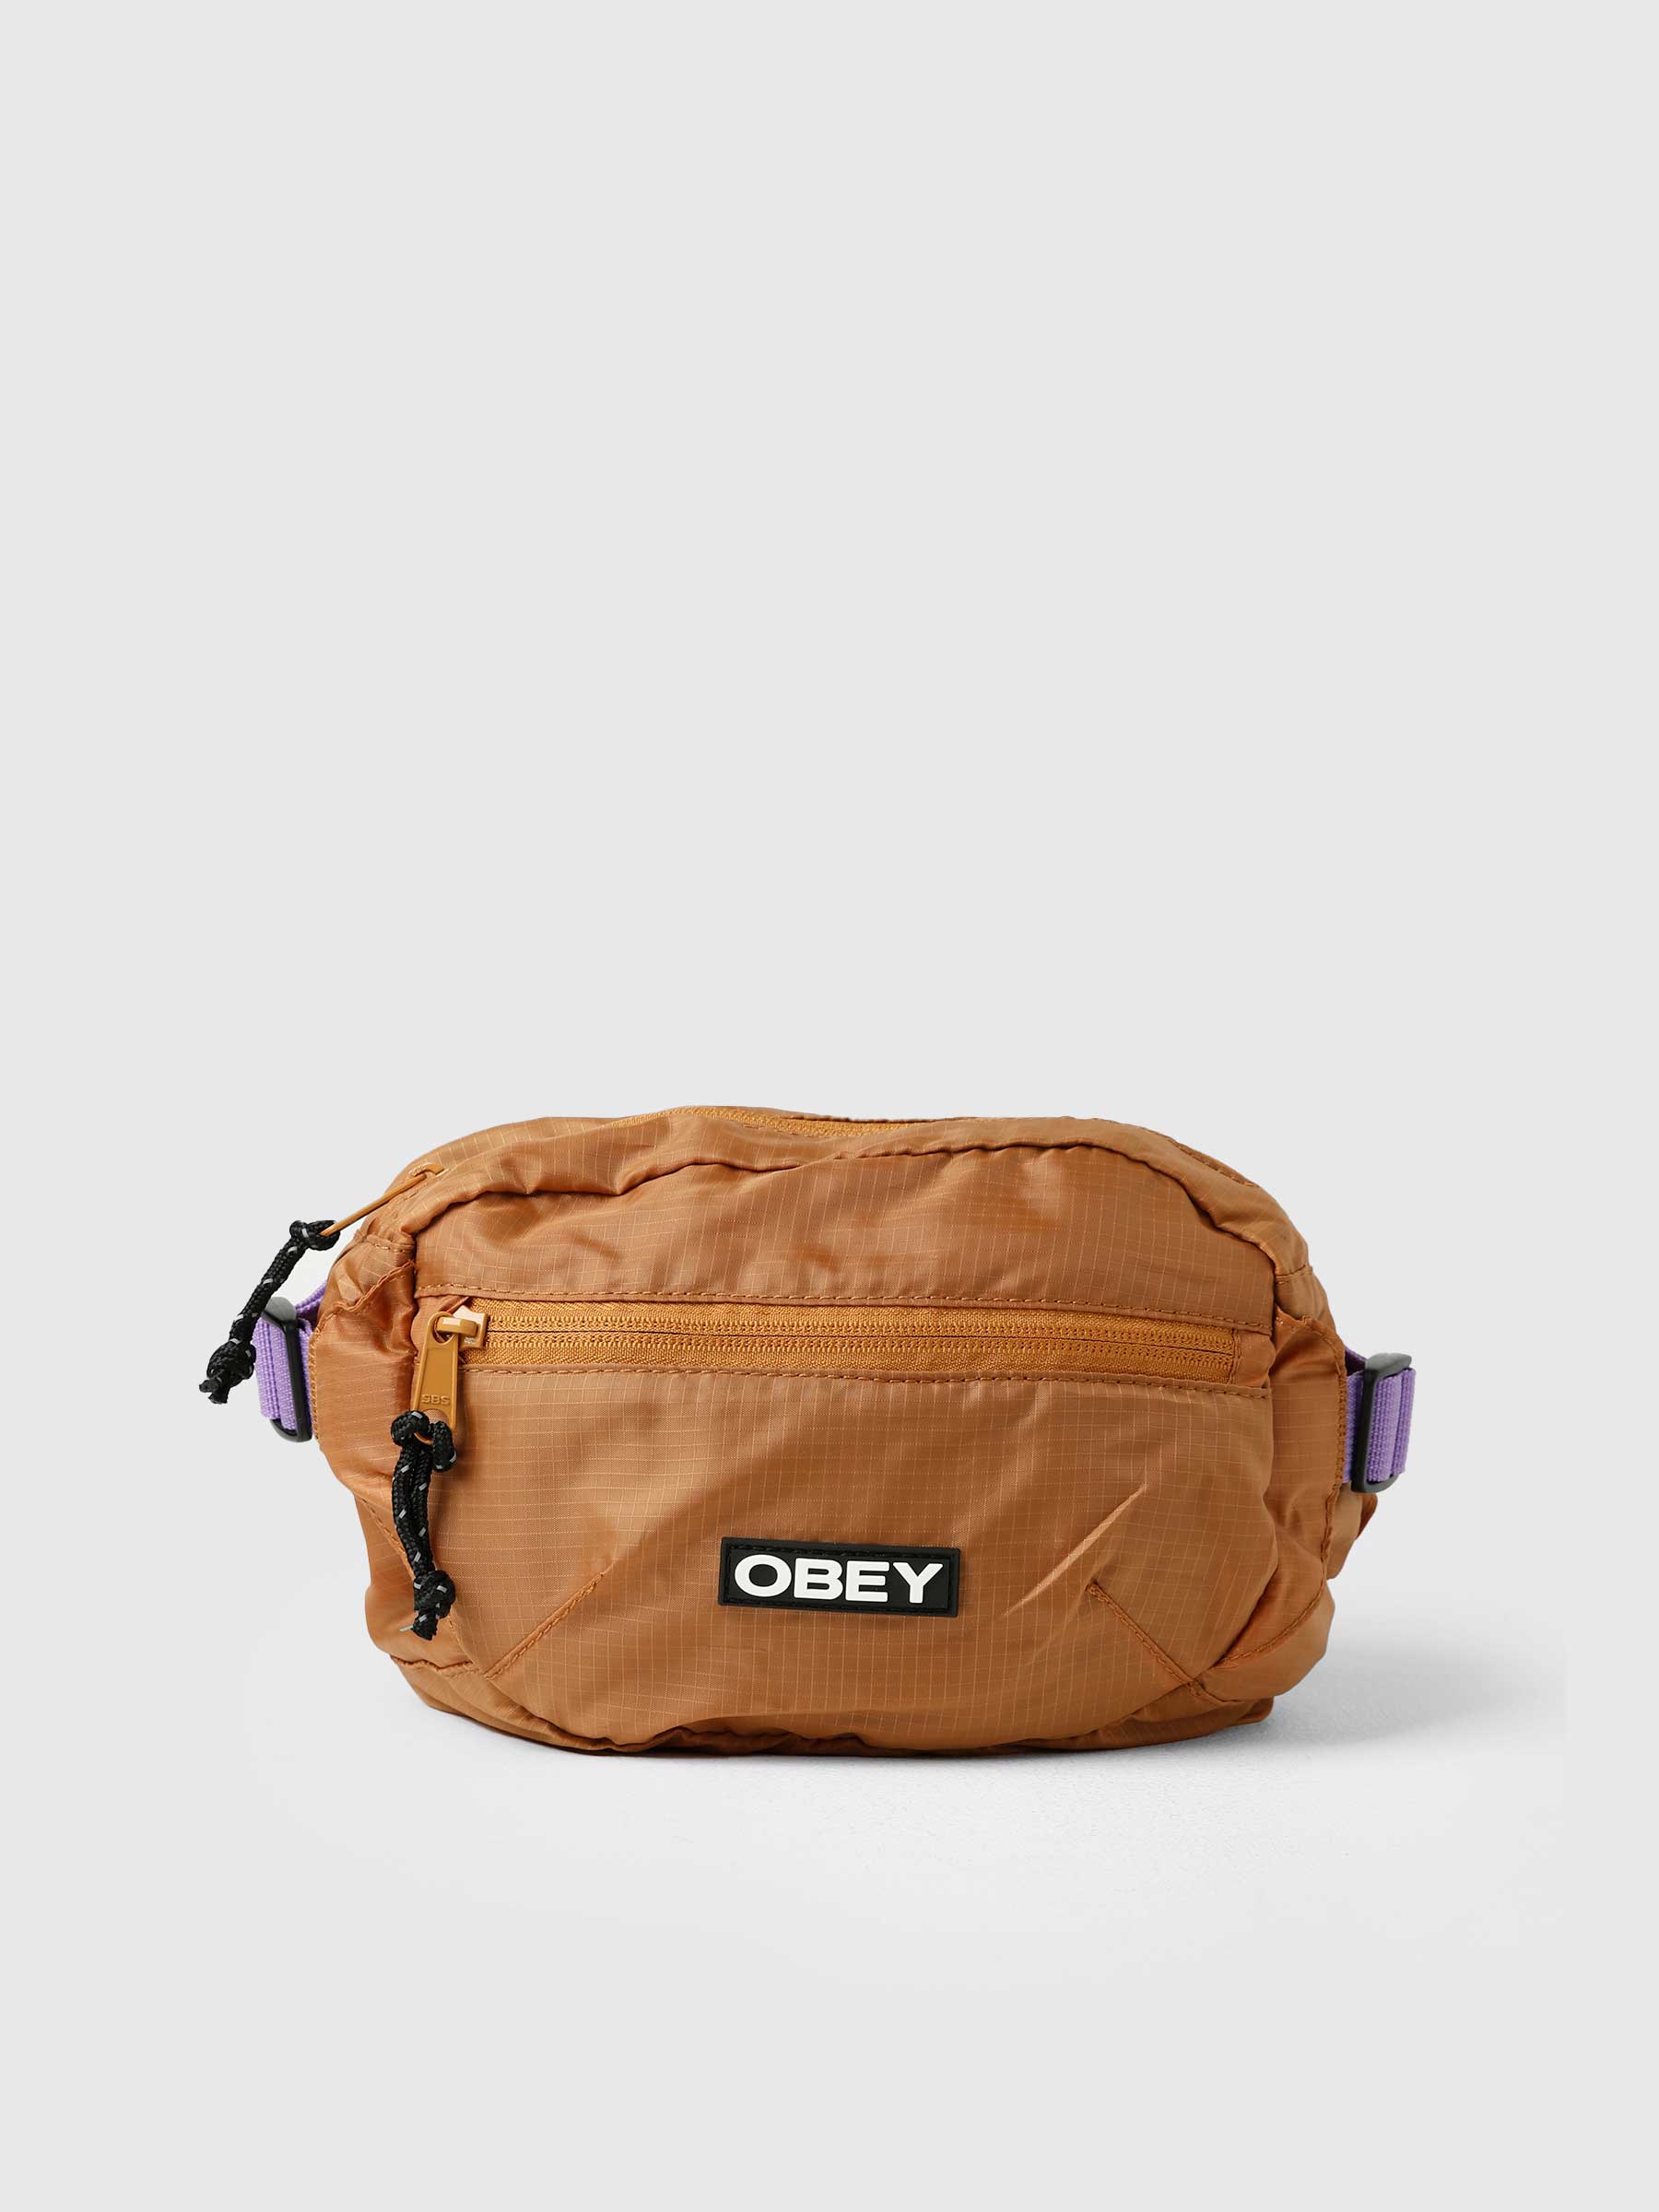 Obey Commuter Waist Bag Brown Multi 